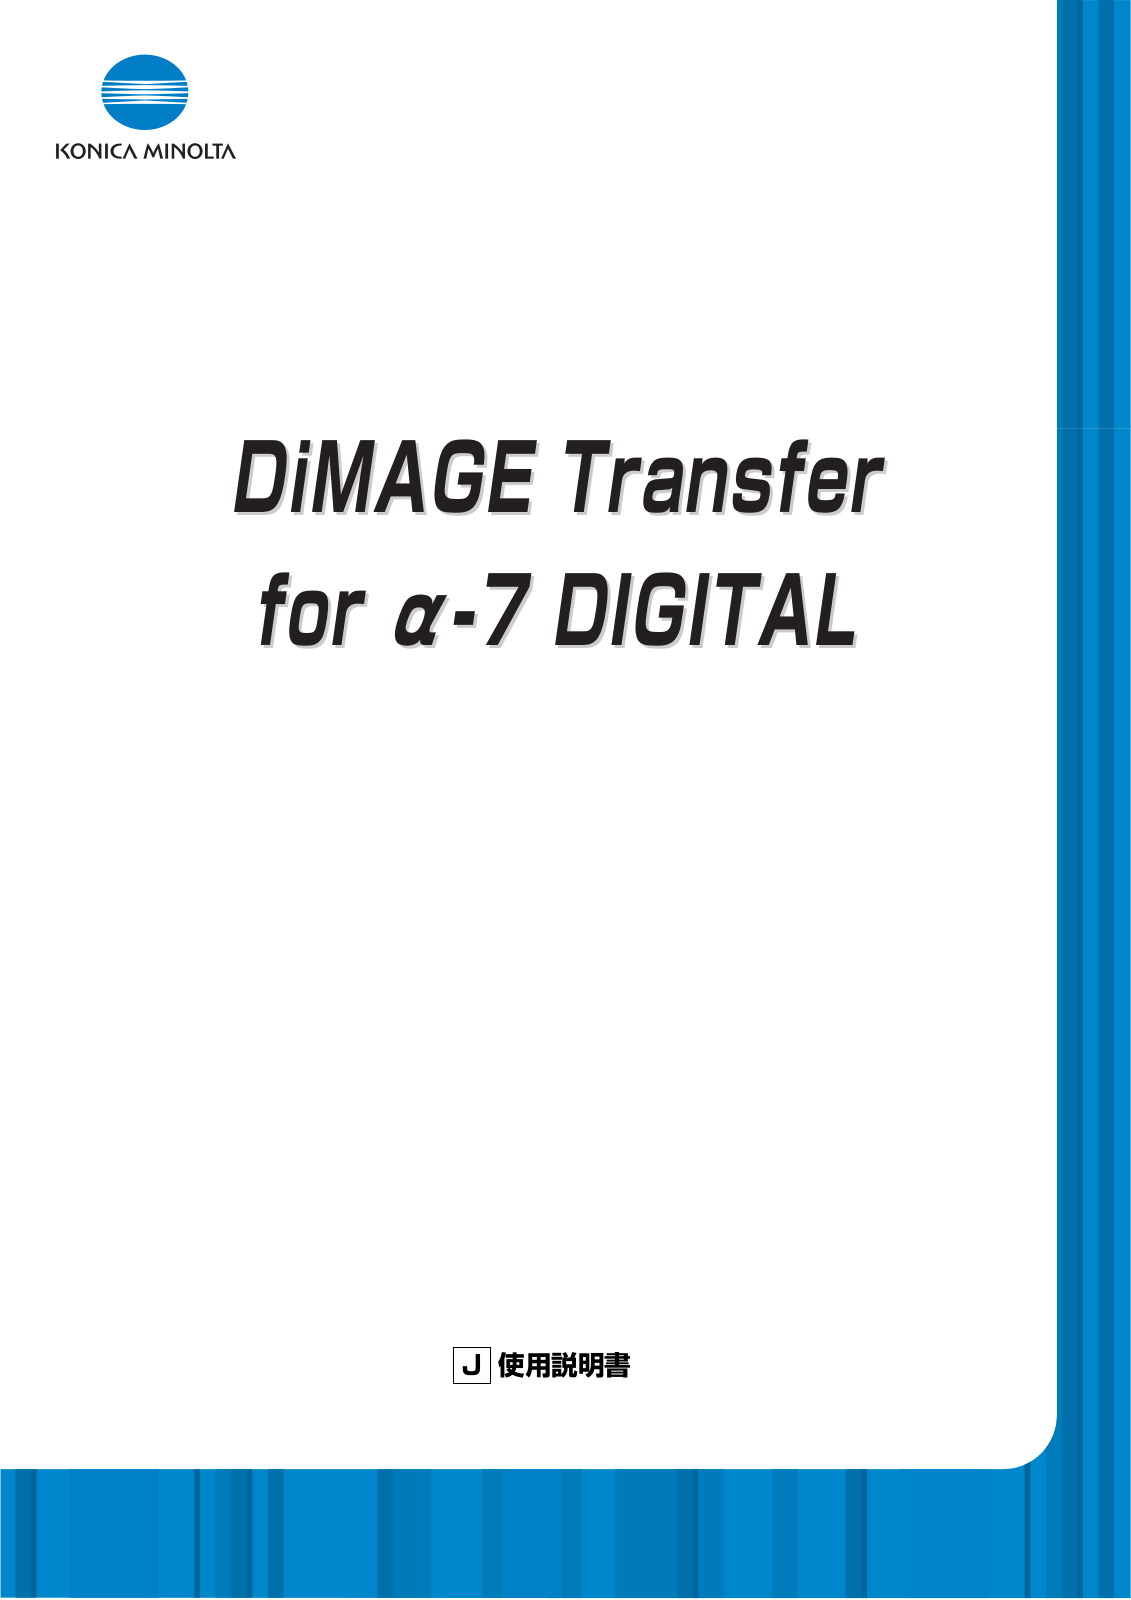 Konica minolta DIMAGE TRANSFER Manual